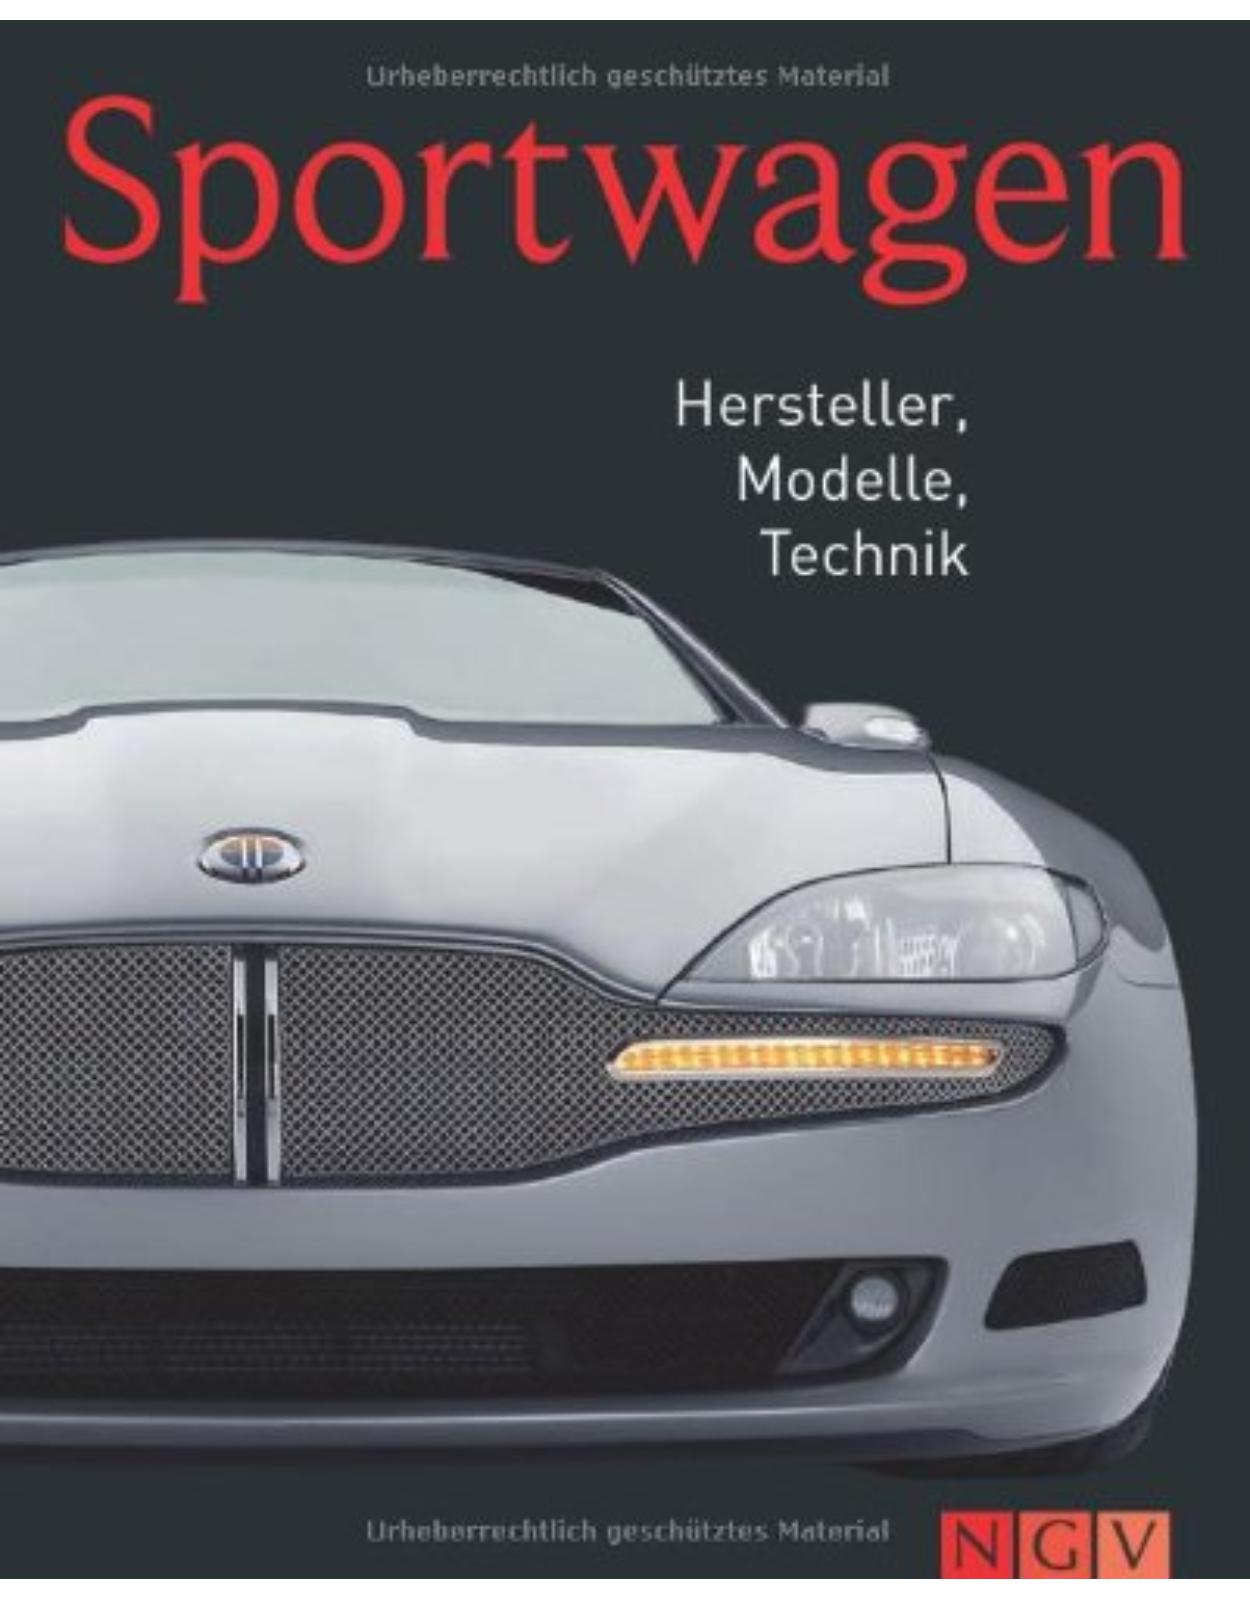 Sportwagen: Hersteller, Modelle, Technik